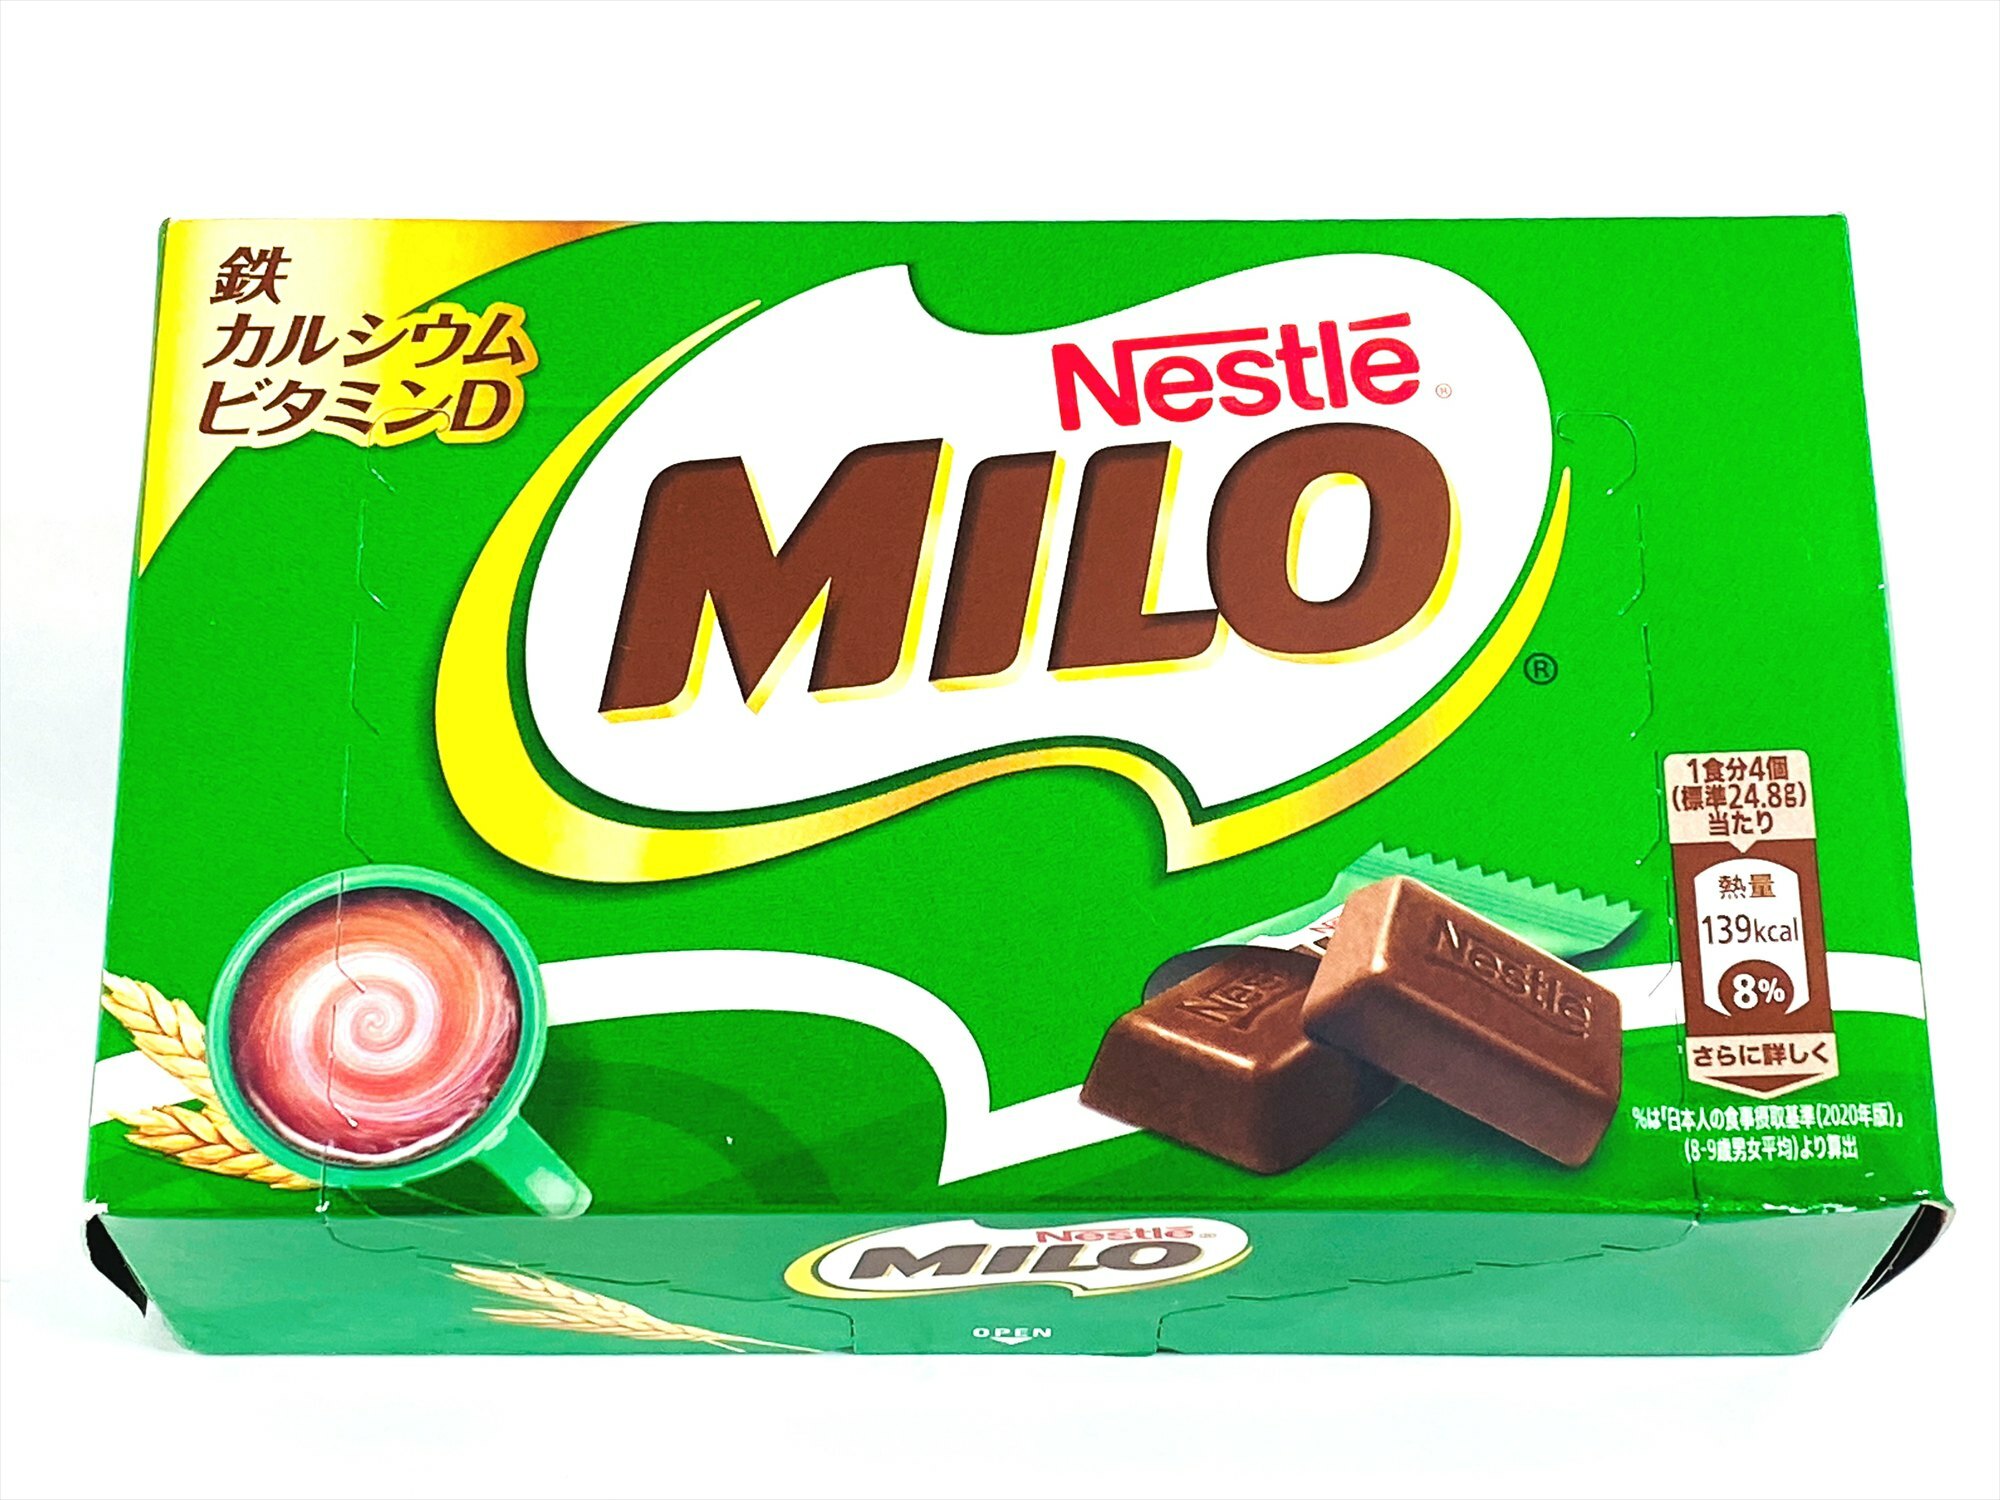 Nestle Milo Box